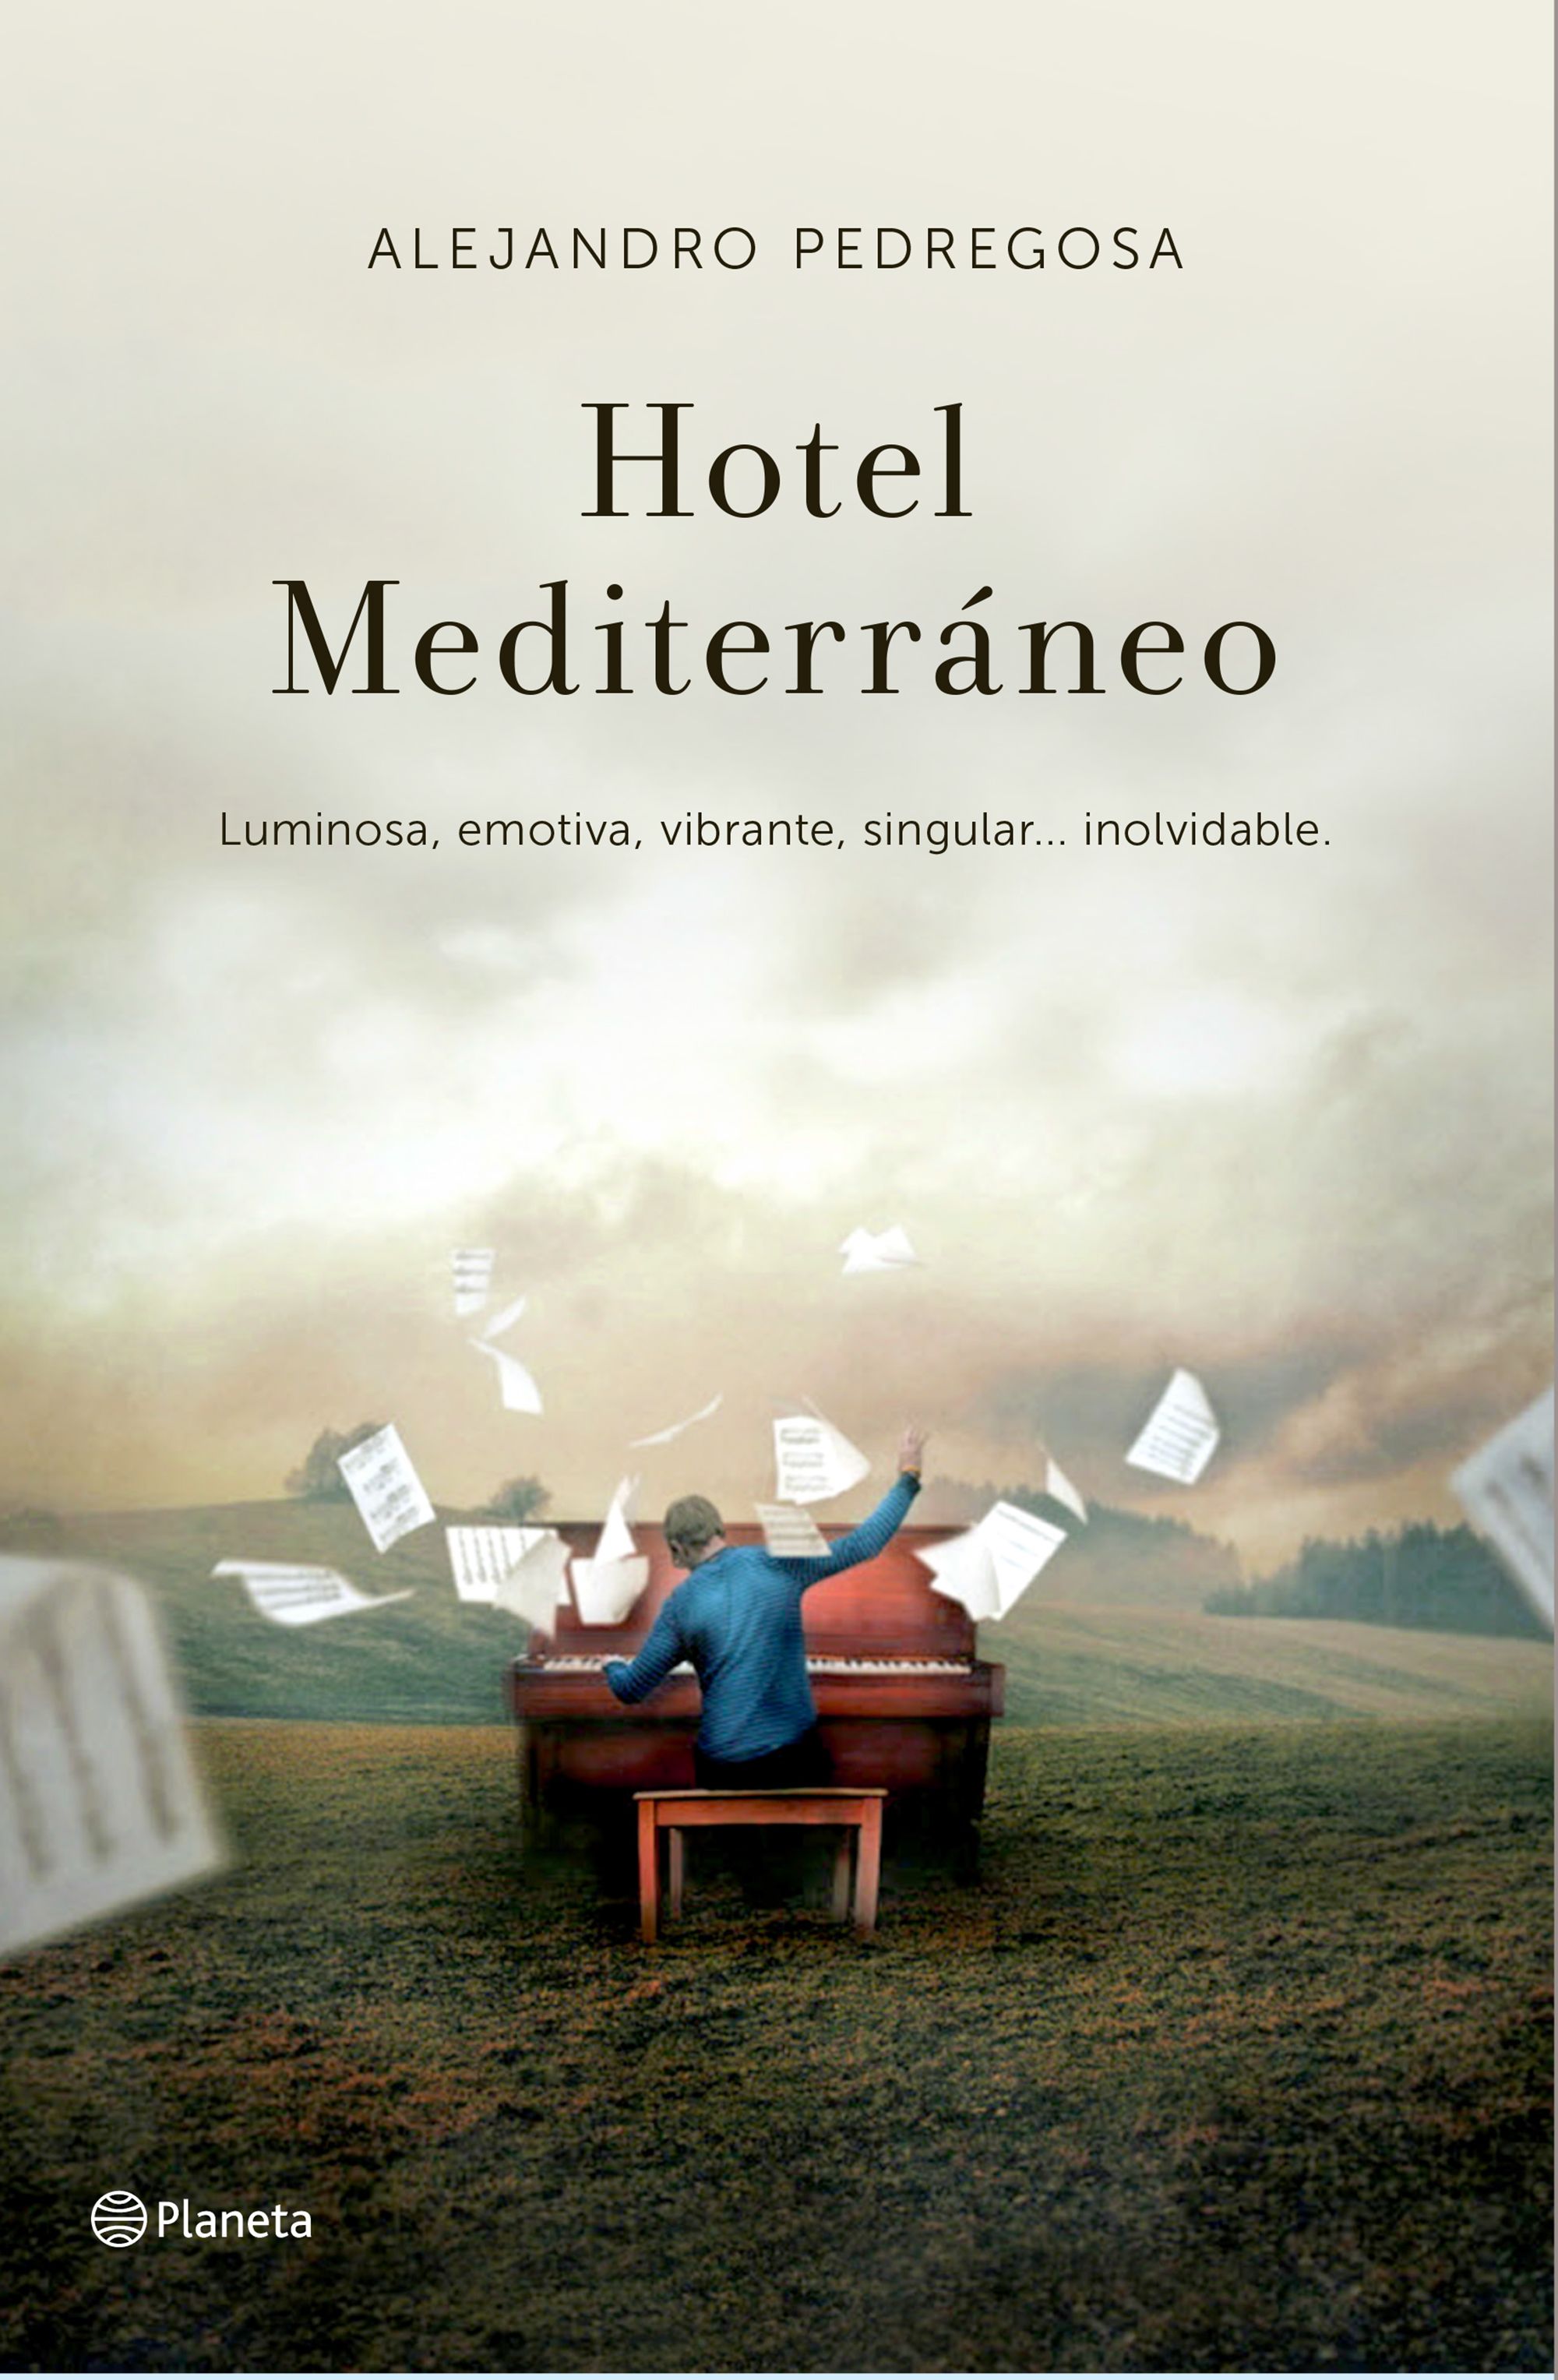 Alejandro Pedregosa - Book Cover